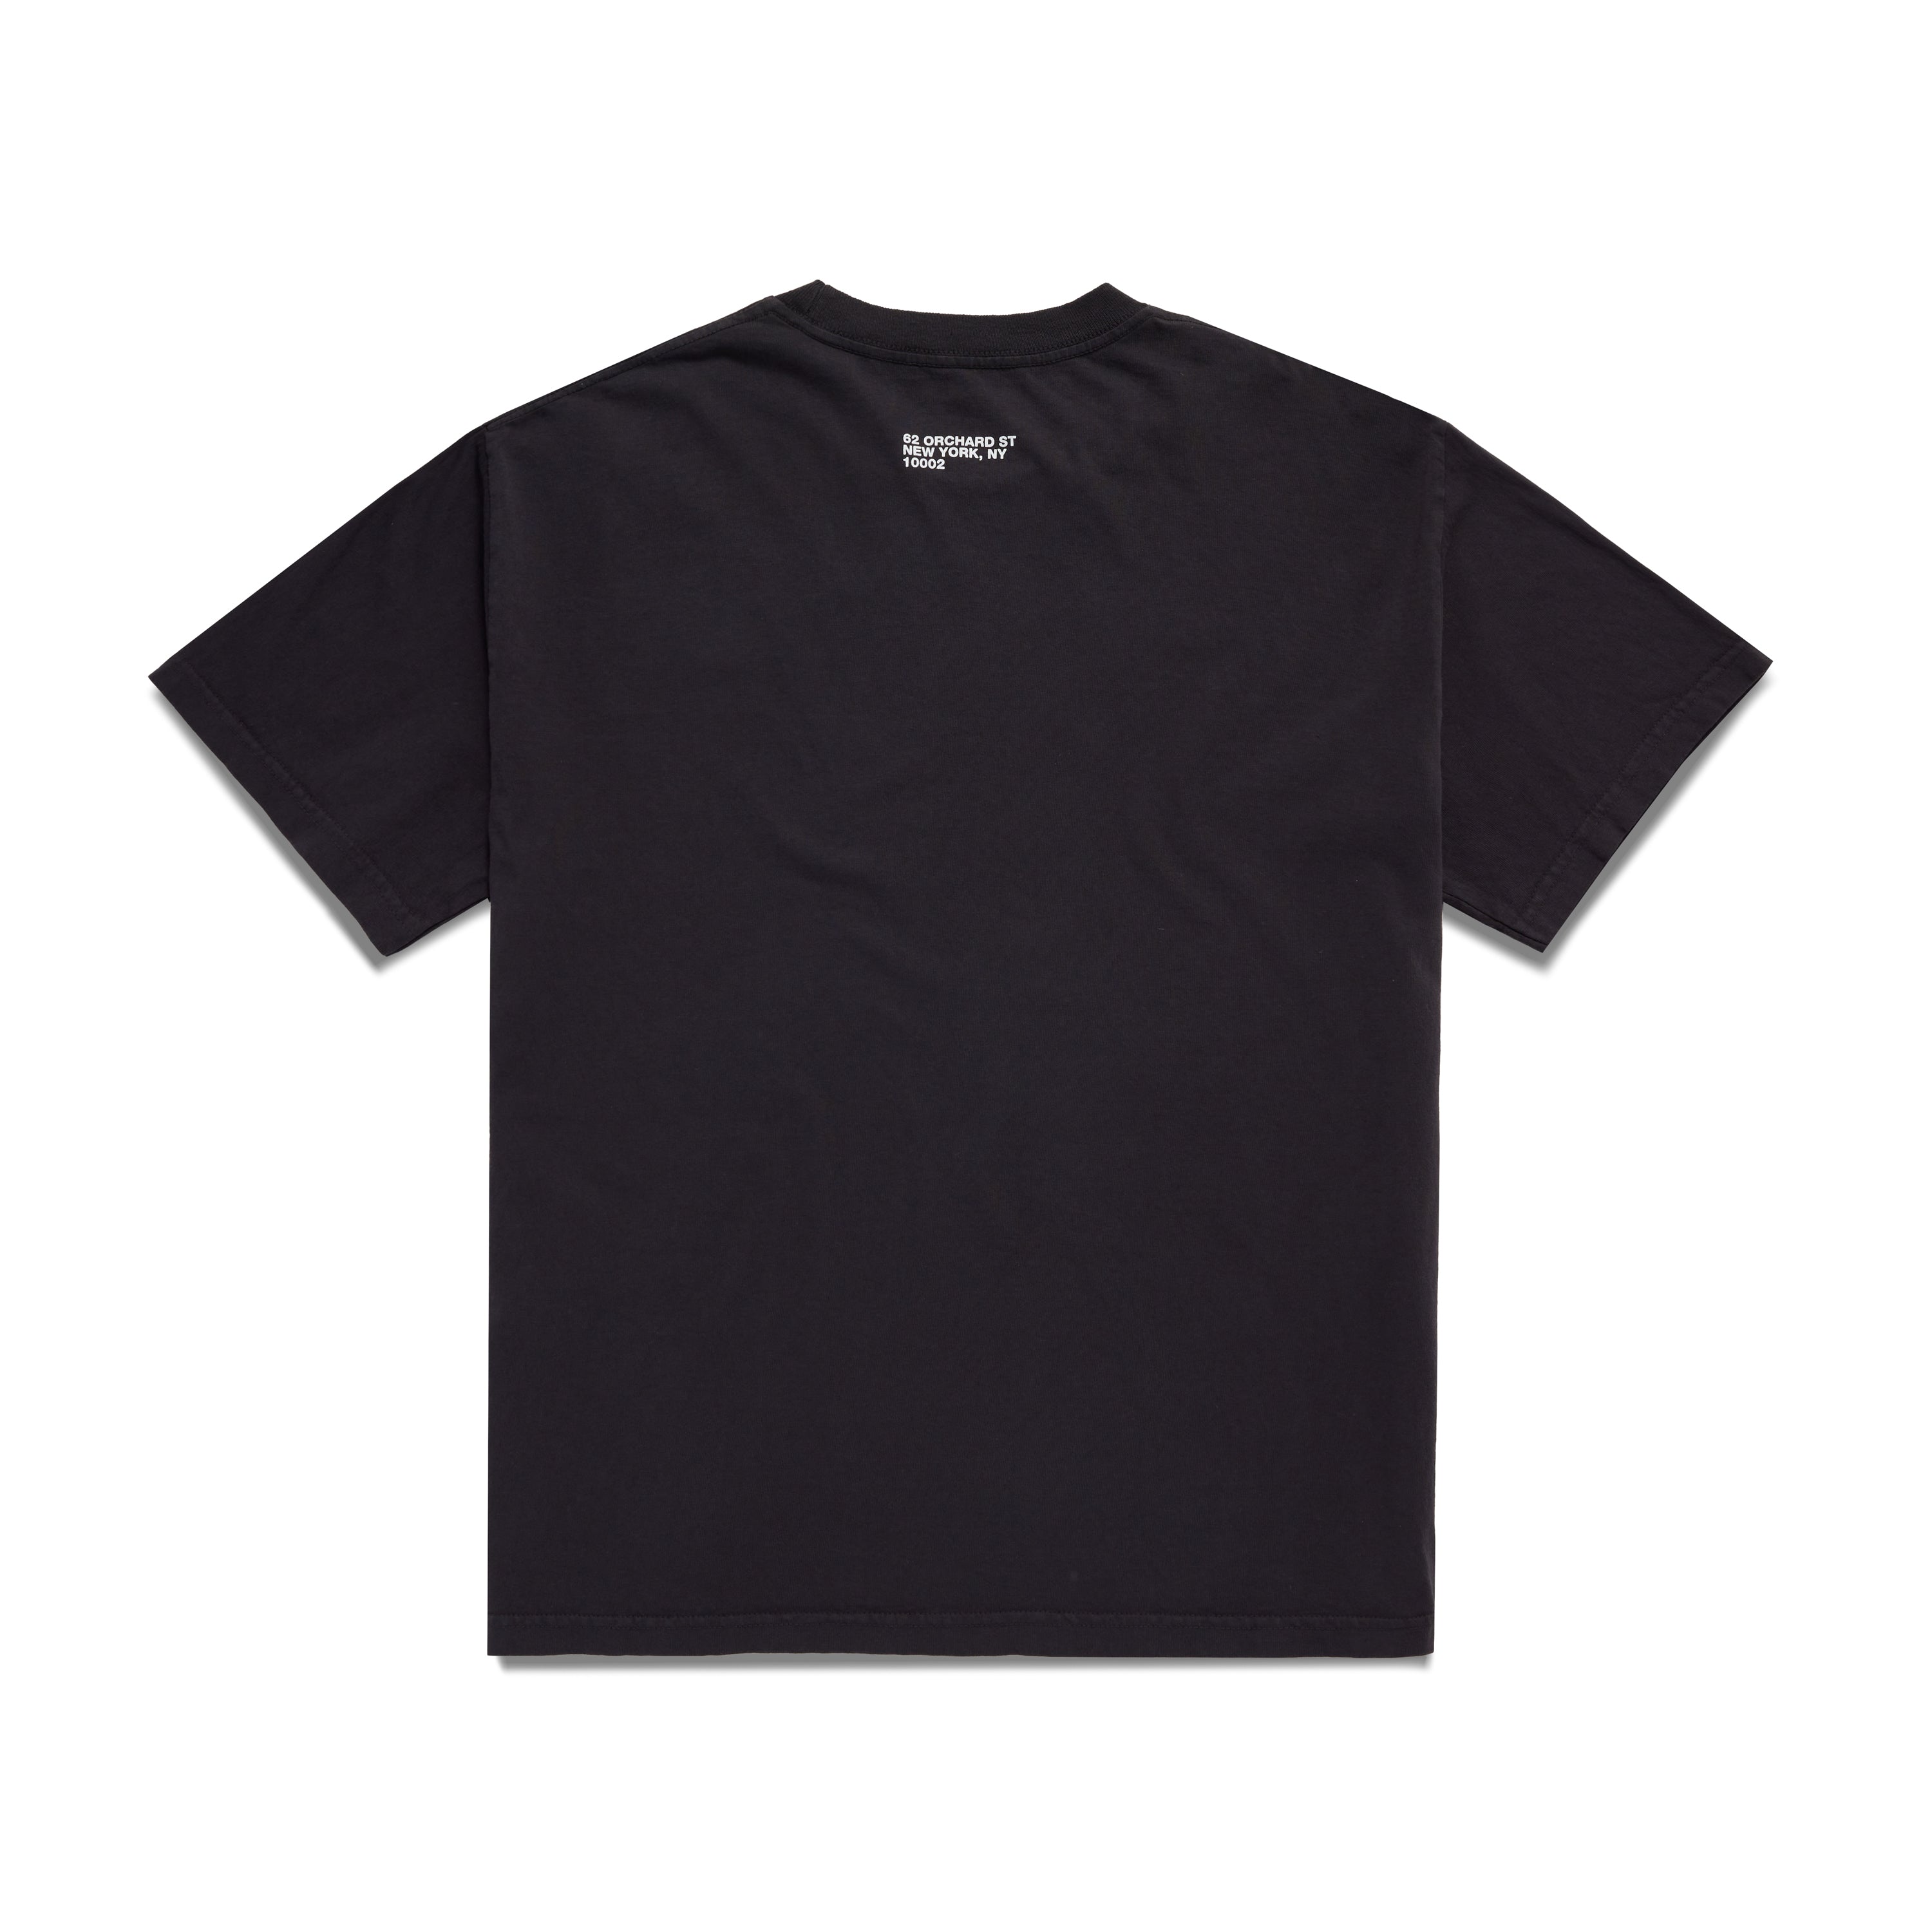 The Jam T Shirt Spray Logo Official Mens Black Tee NEW Mod Classic